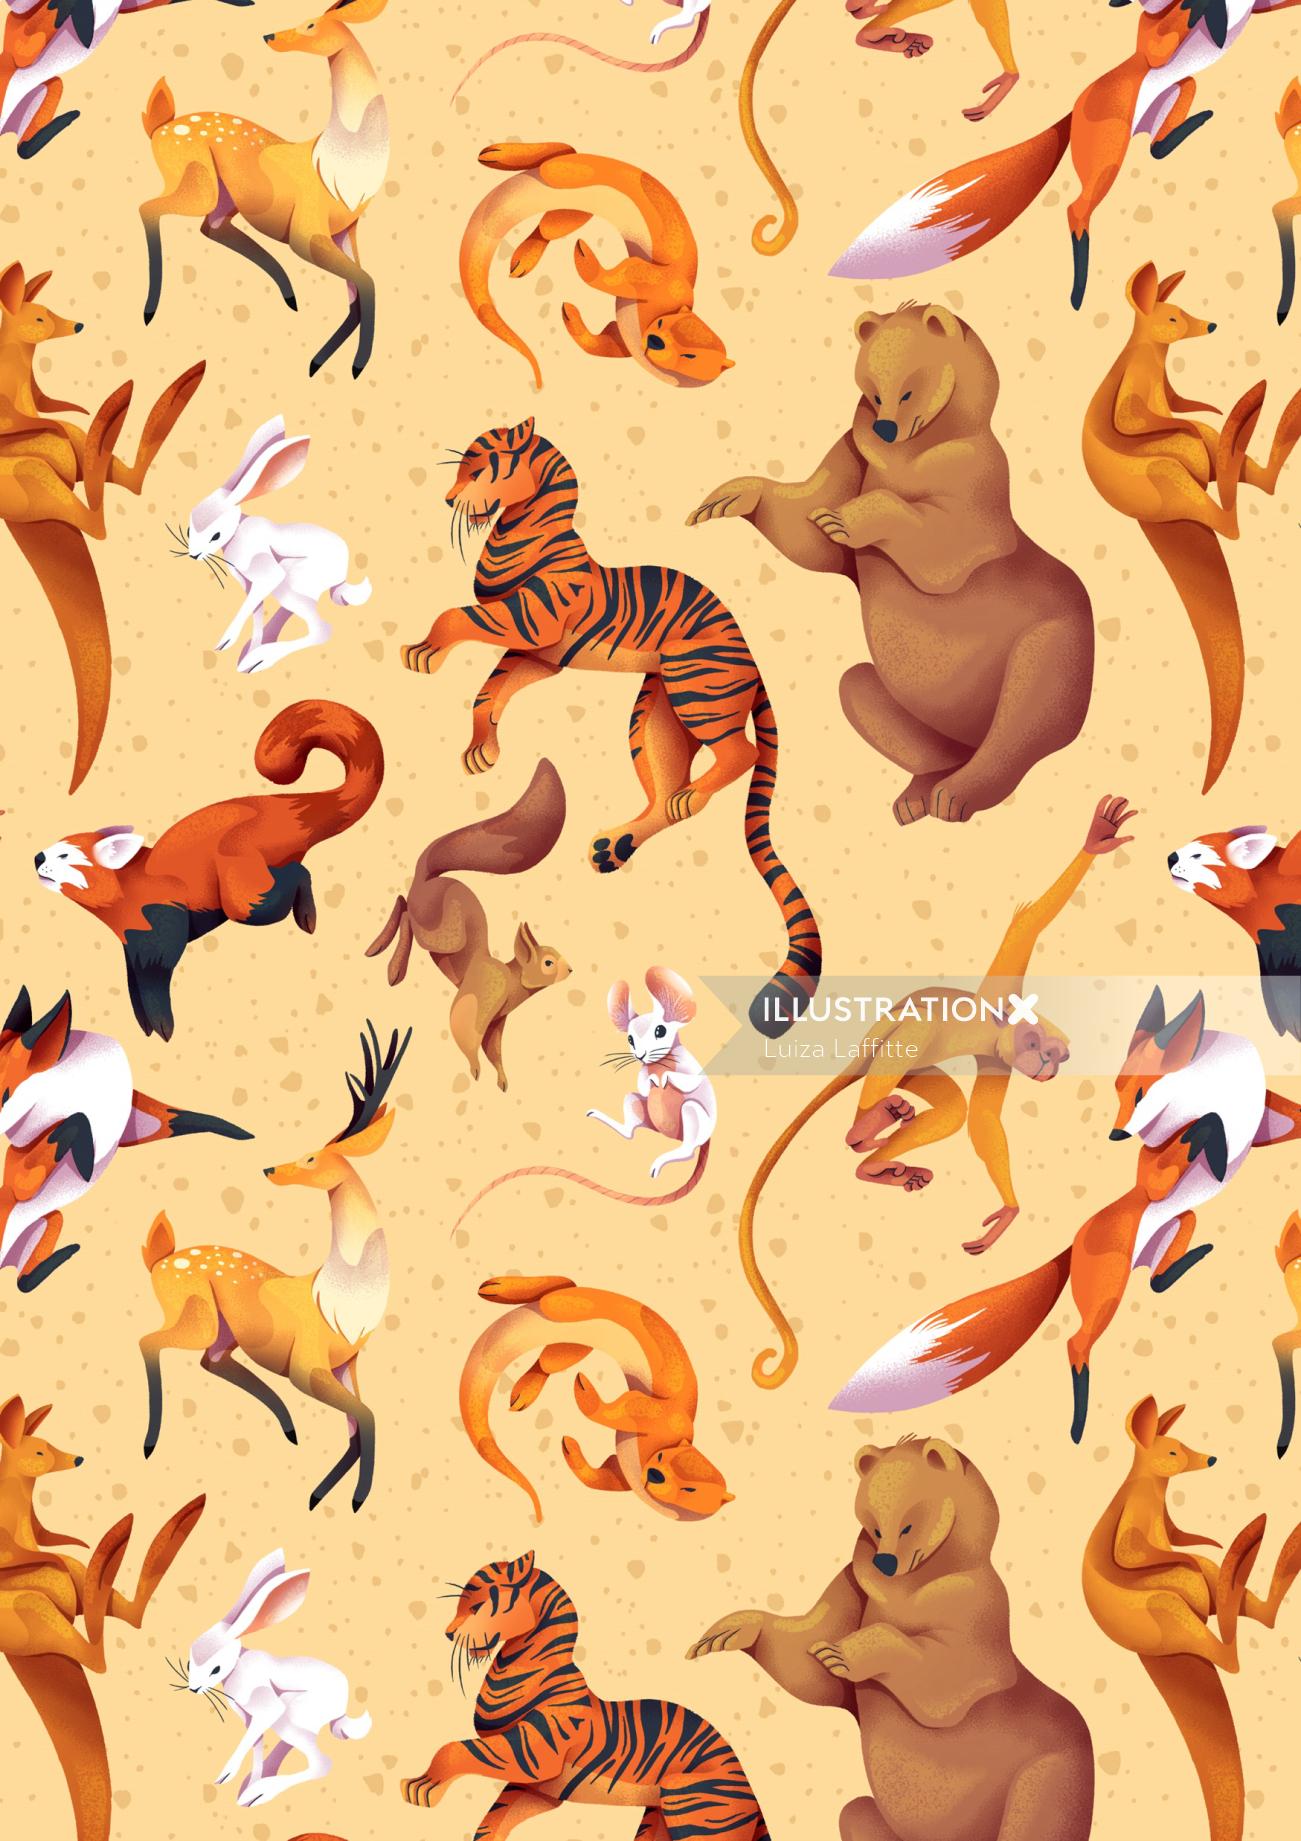 tiger, animals, bear, kangourou, rabbit, bunny, mouse, deer, monkey, pattern, fox, squirel